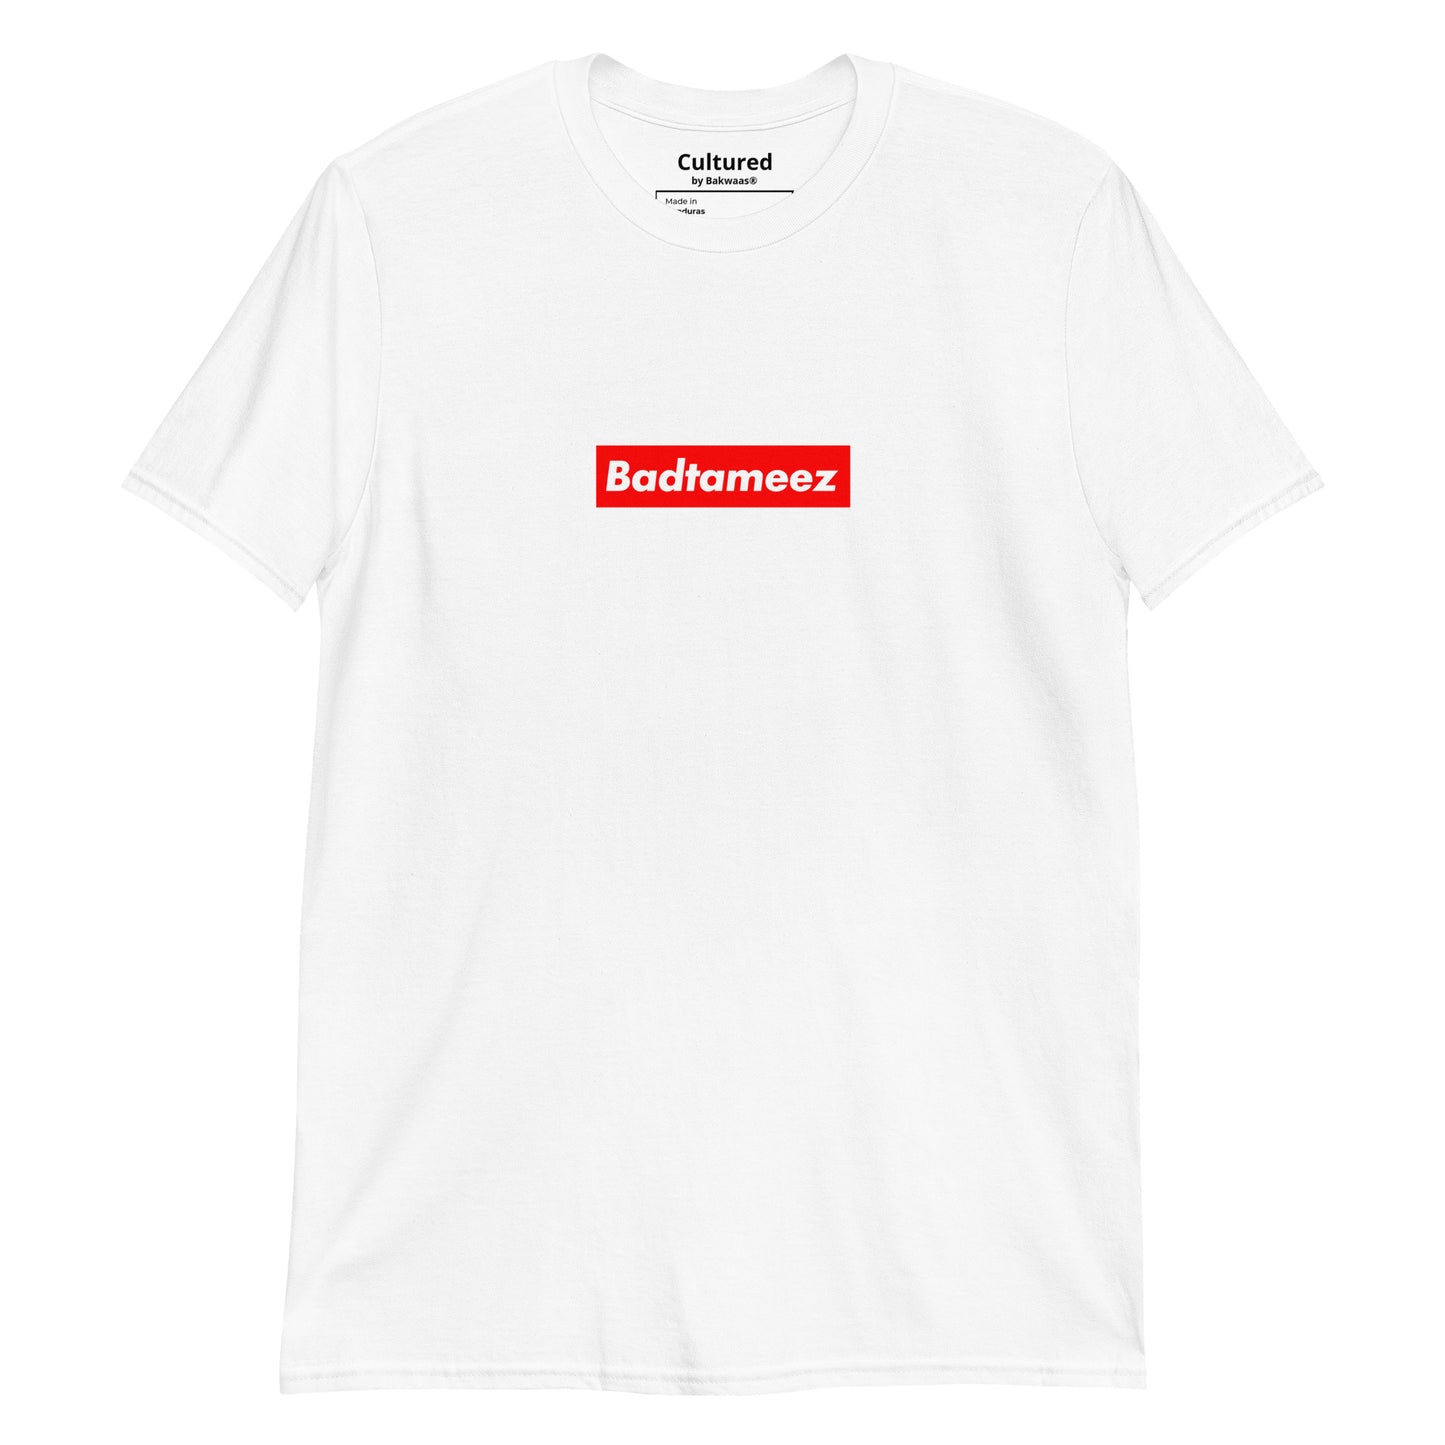 Badtameez T-Shirt